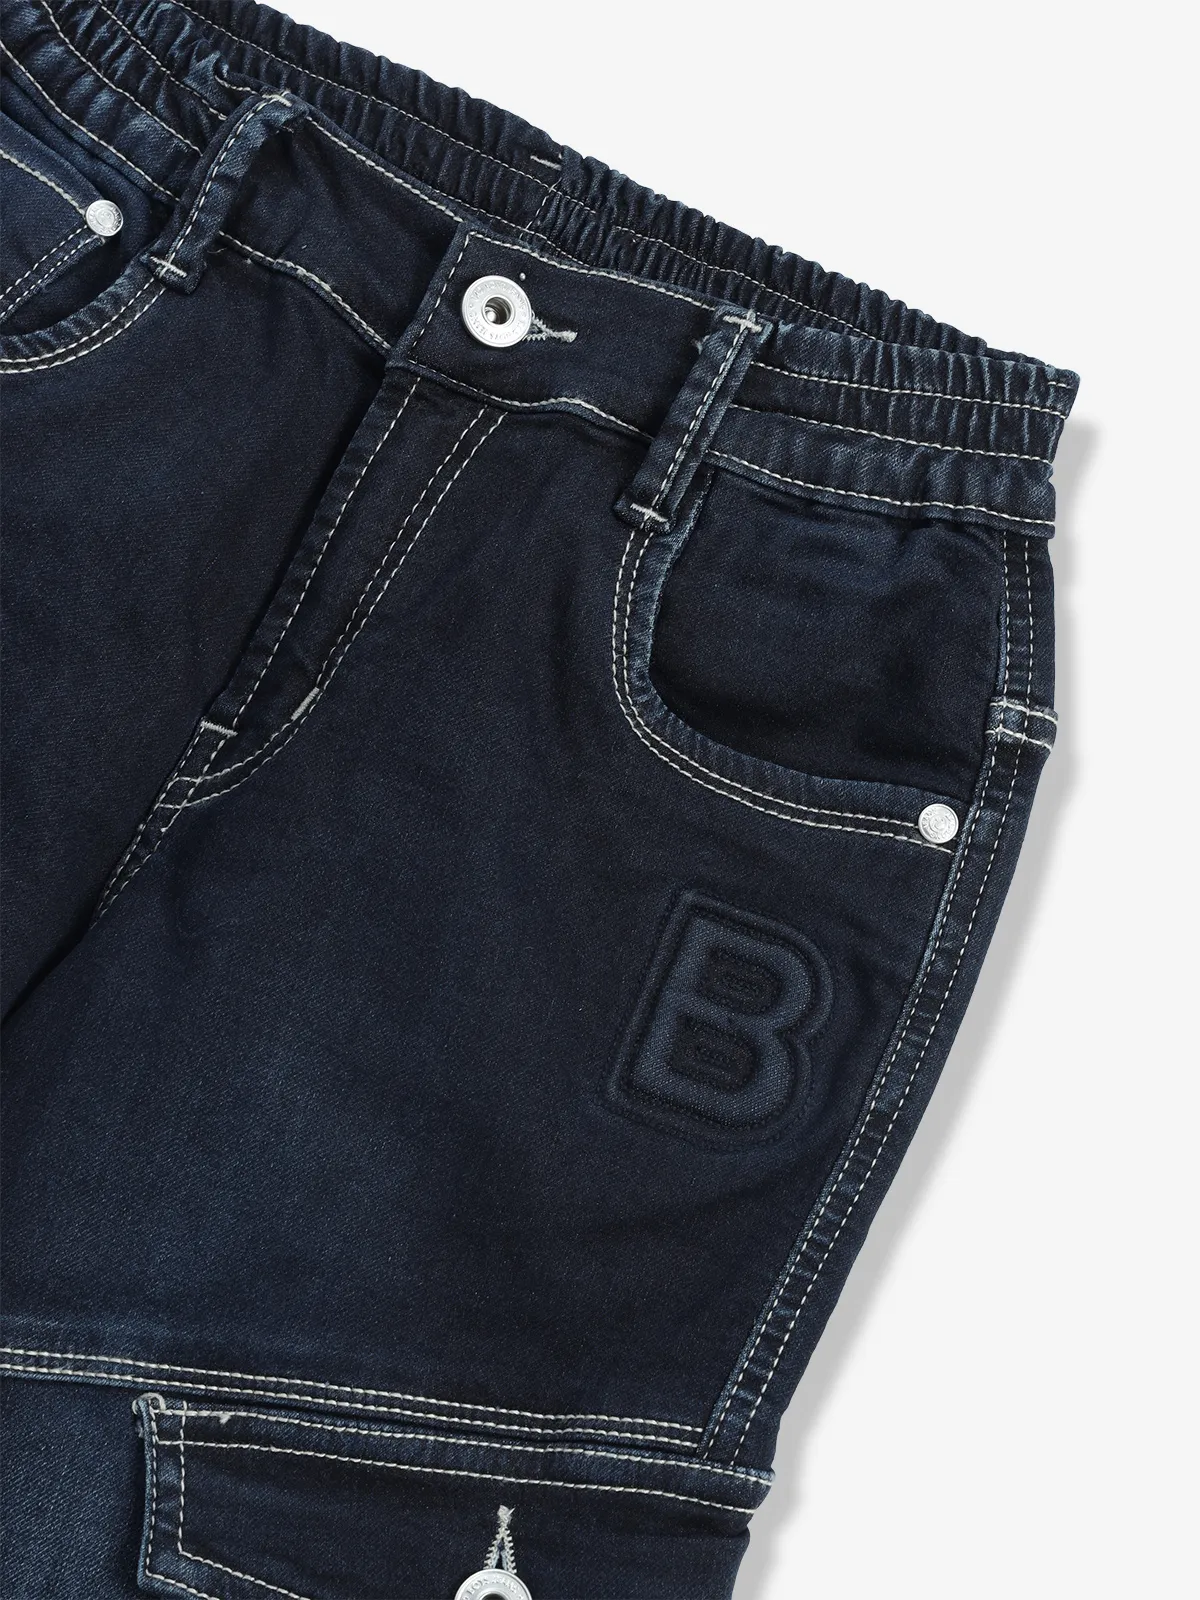 BAD BOYS navy denim cargo jeans for boys